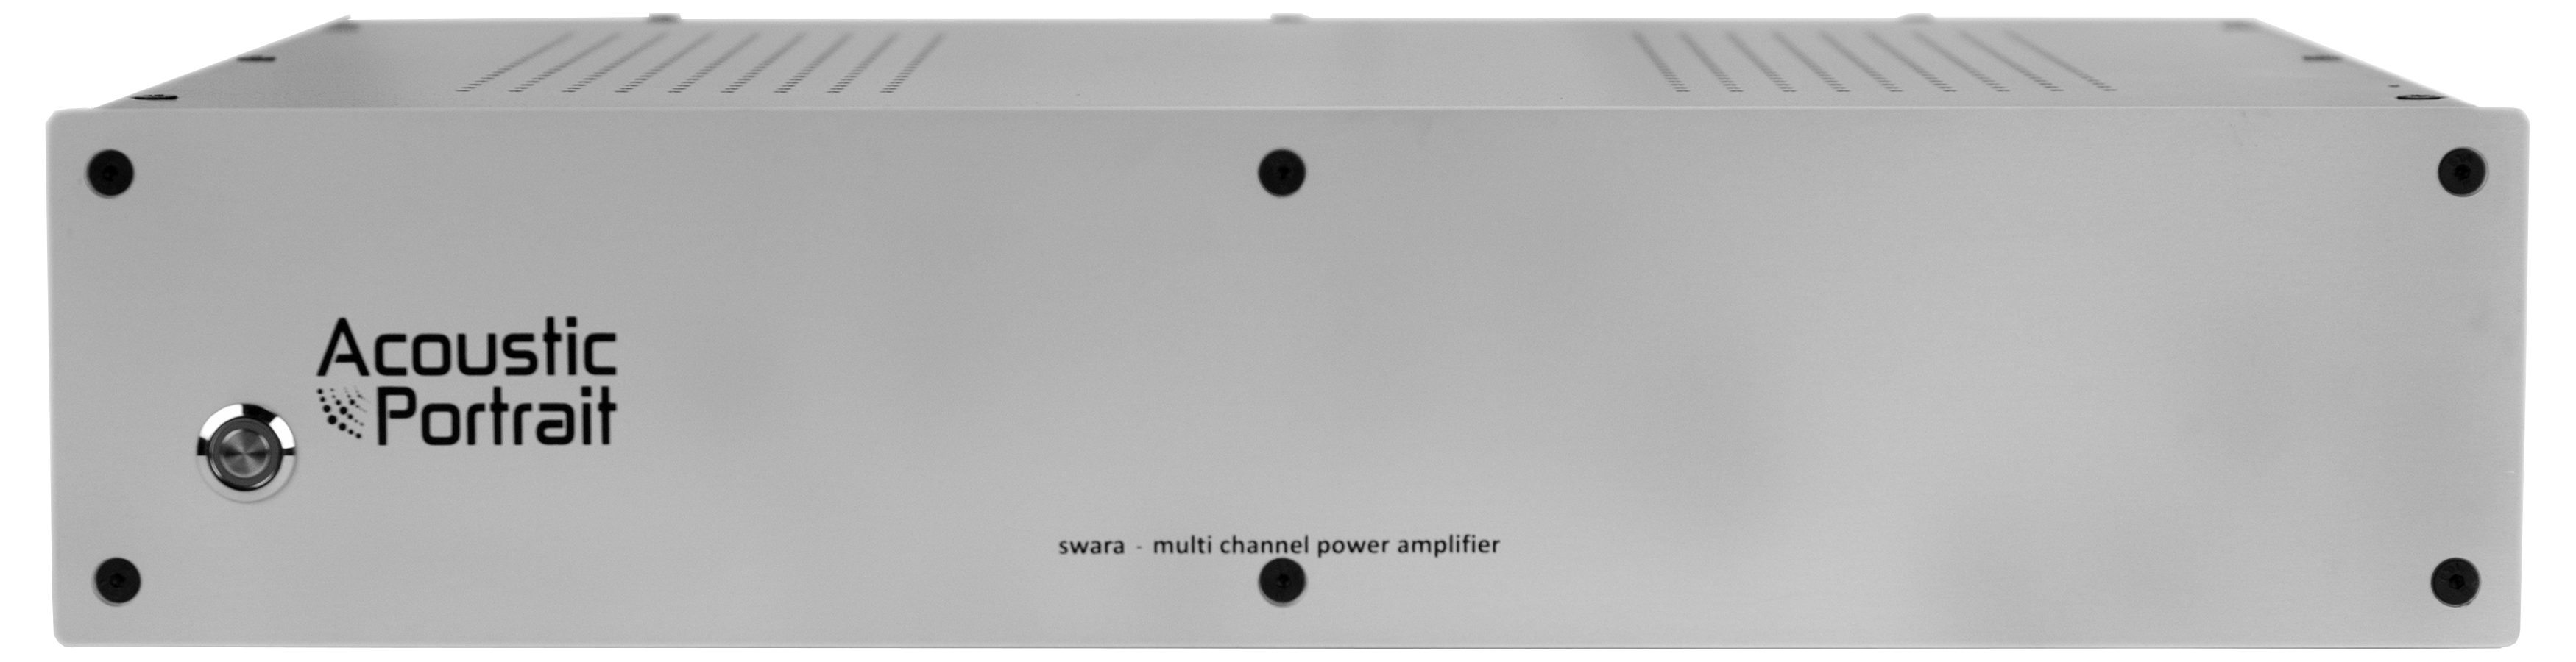 swara multi channel power amp front